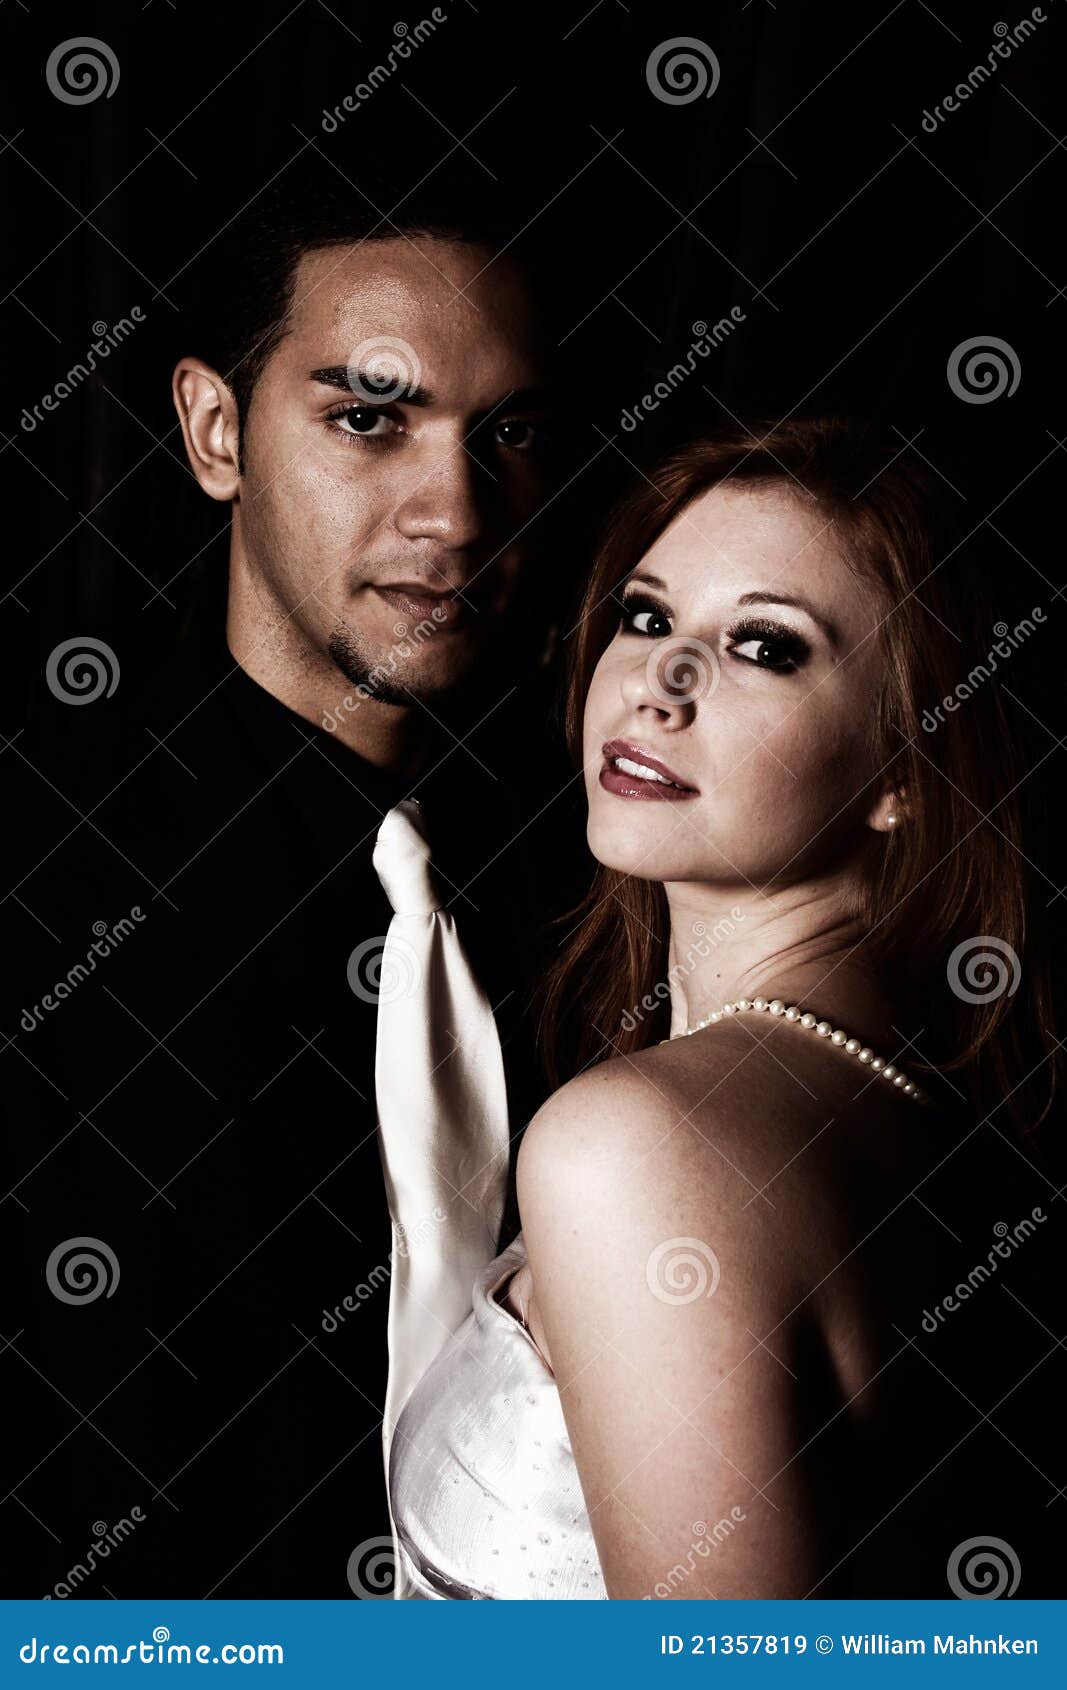 dark filtered photo of couple